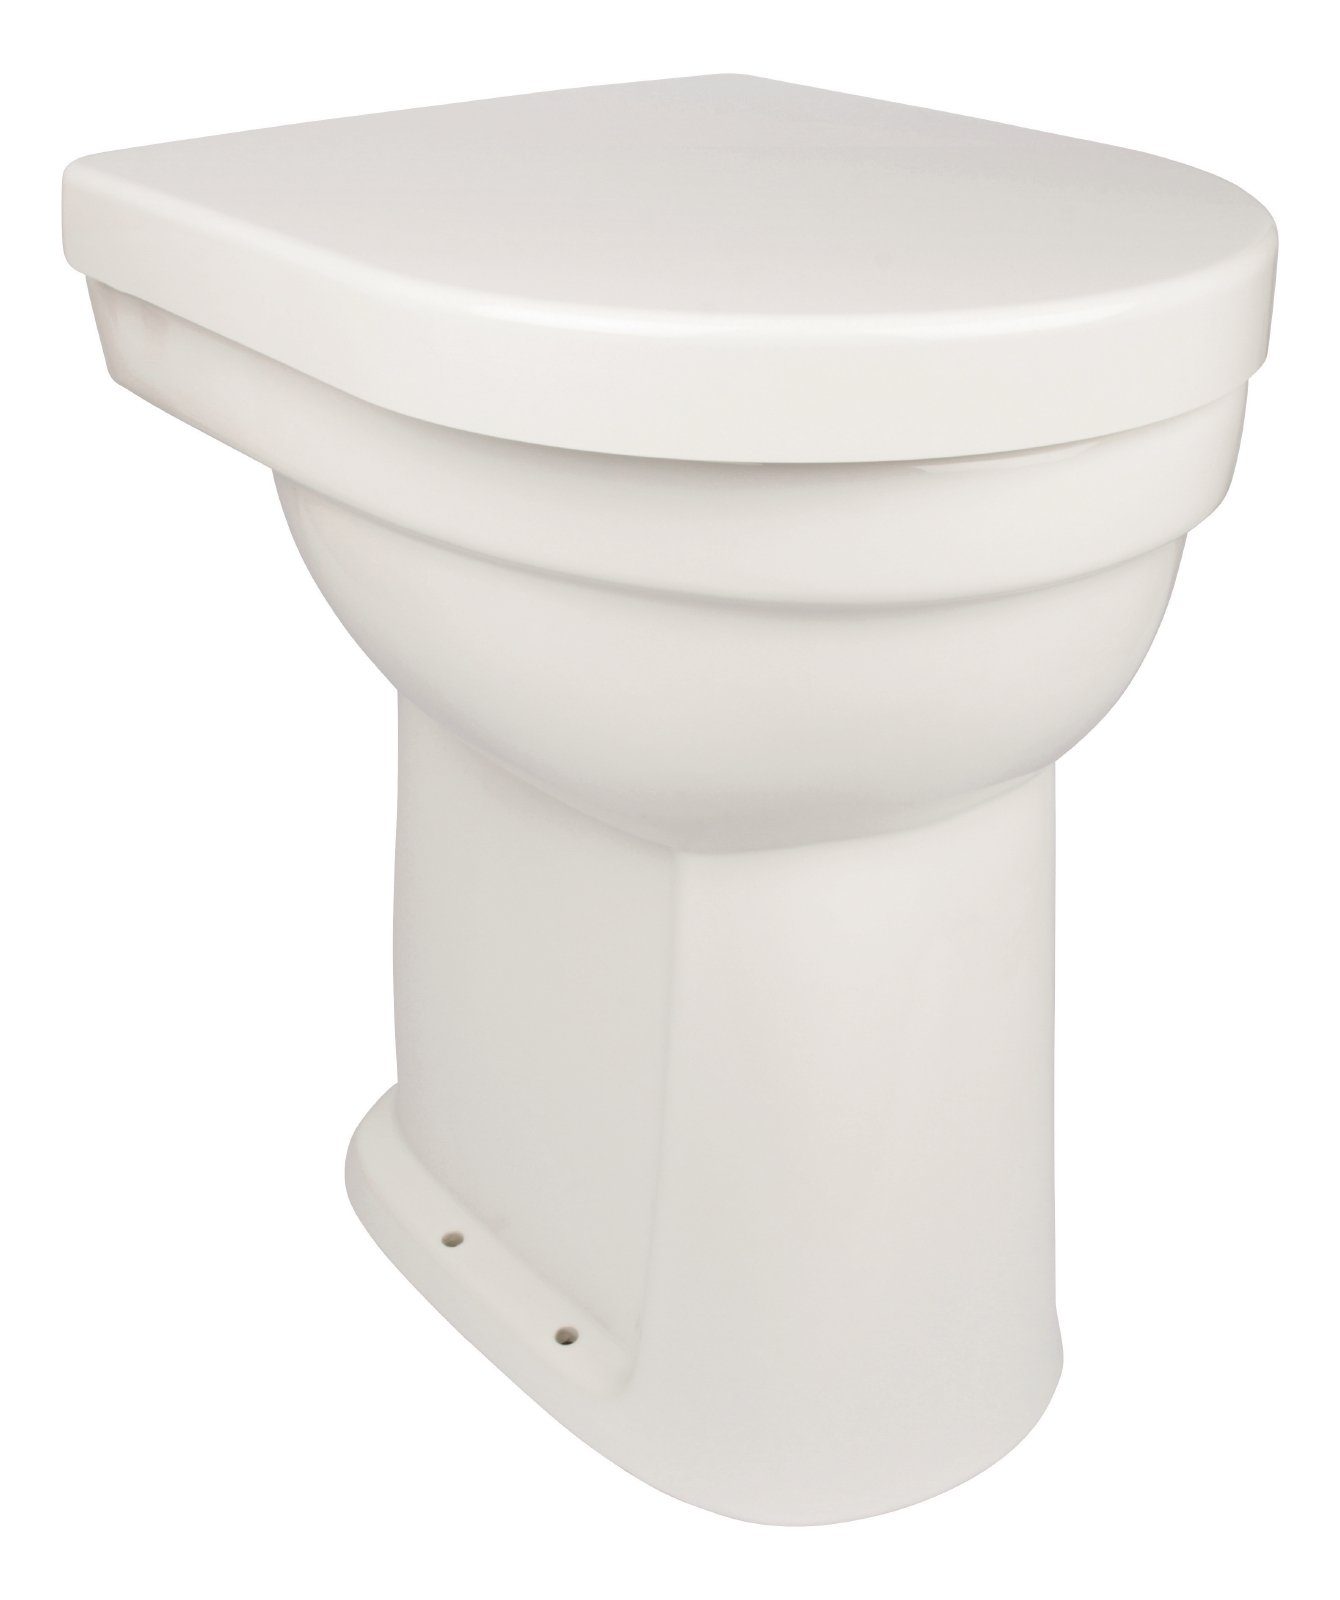 Calmwaters Flachspül-WC, Bodenstehend, Abgang Senkrecht, Stand-WC, Weiß,  Flachspüler, 10 cm erhöht, WC-Sitz mit Absenkautomatik